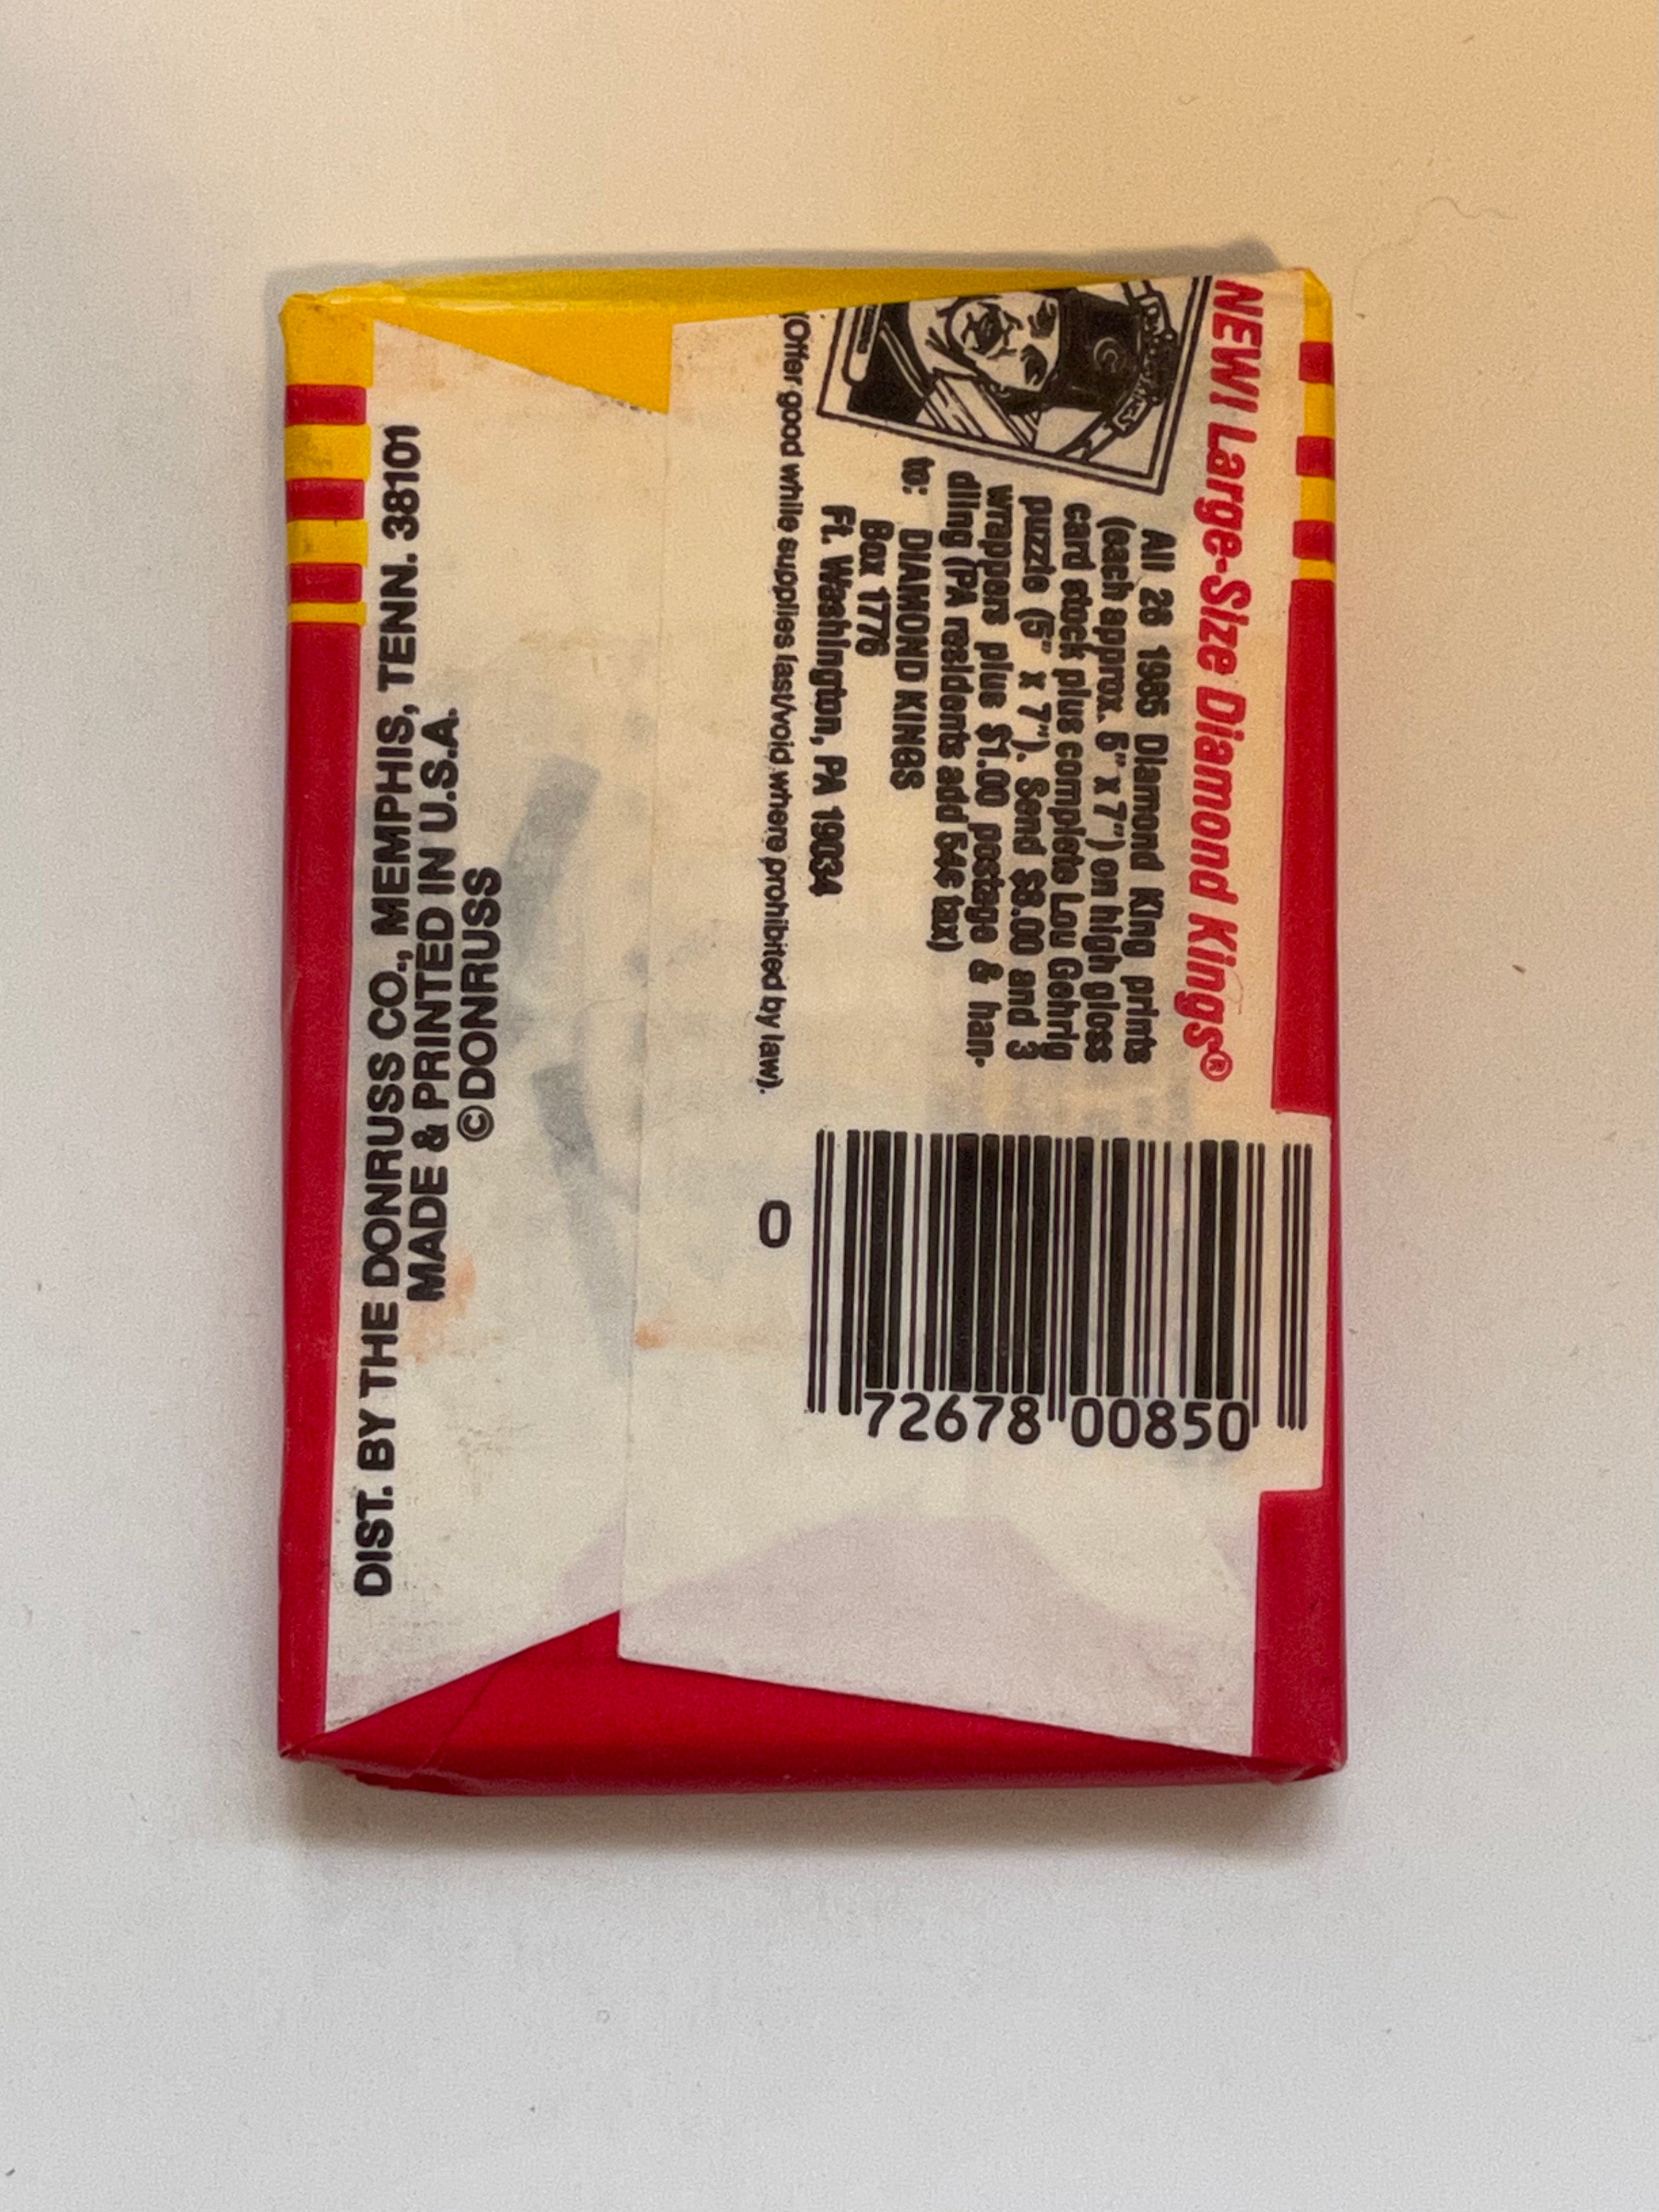 1985 Donruss baseball cards sealed pack